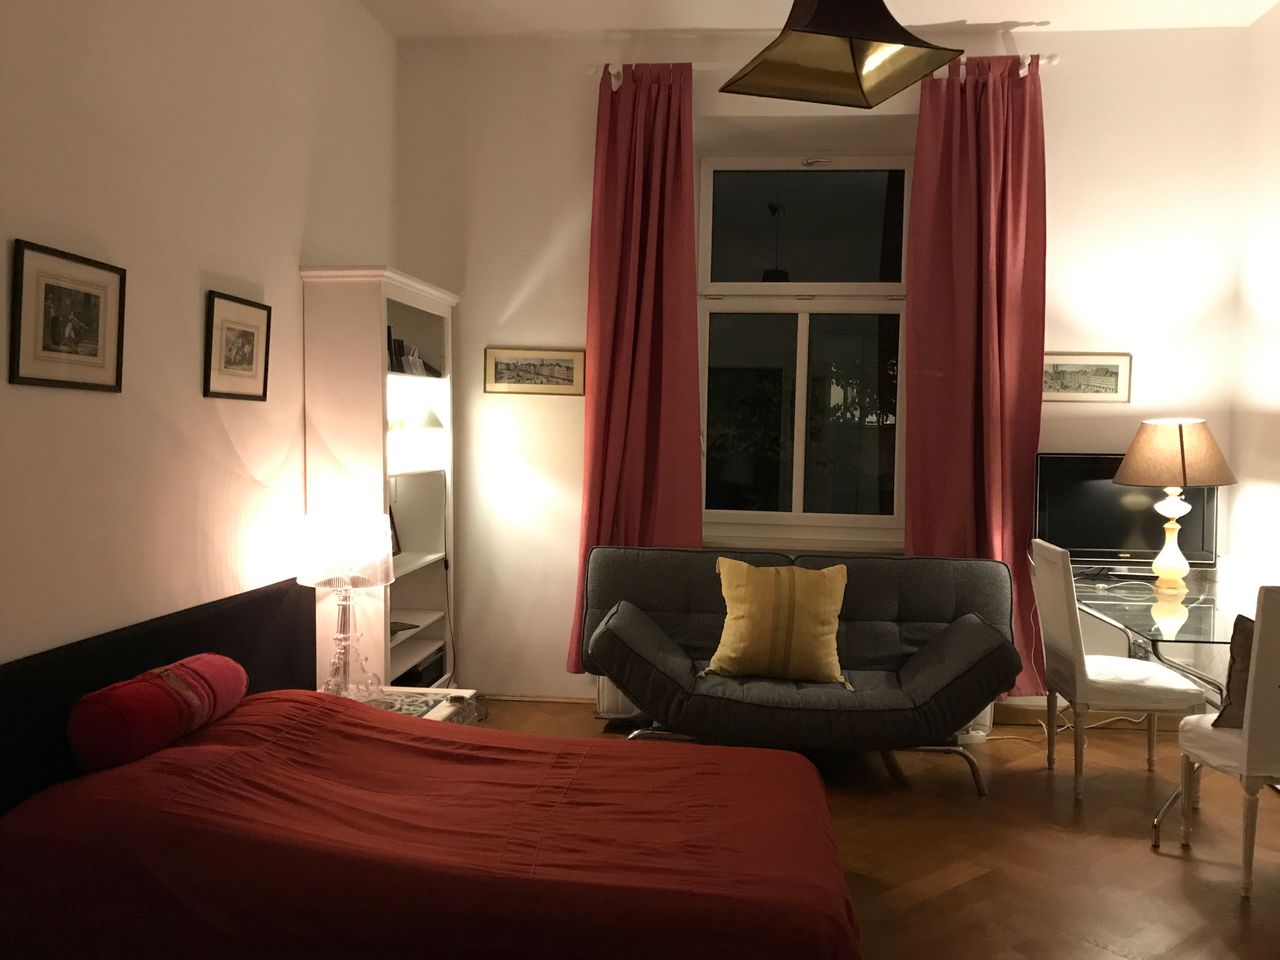 Luxury 3 rooms in best location - University, Opera, Marienplatz 5min